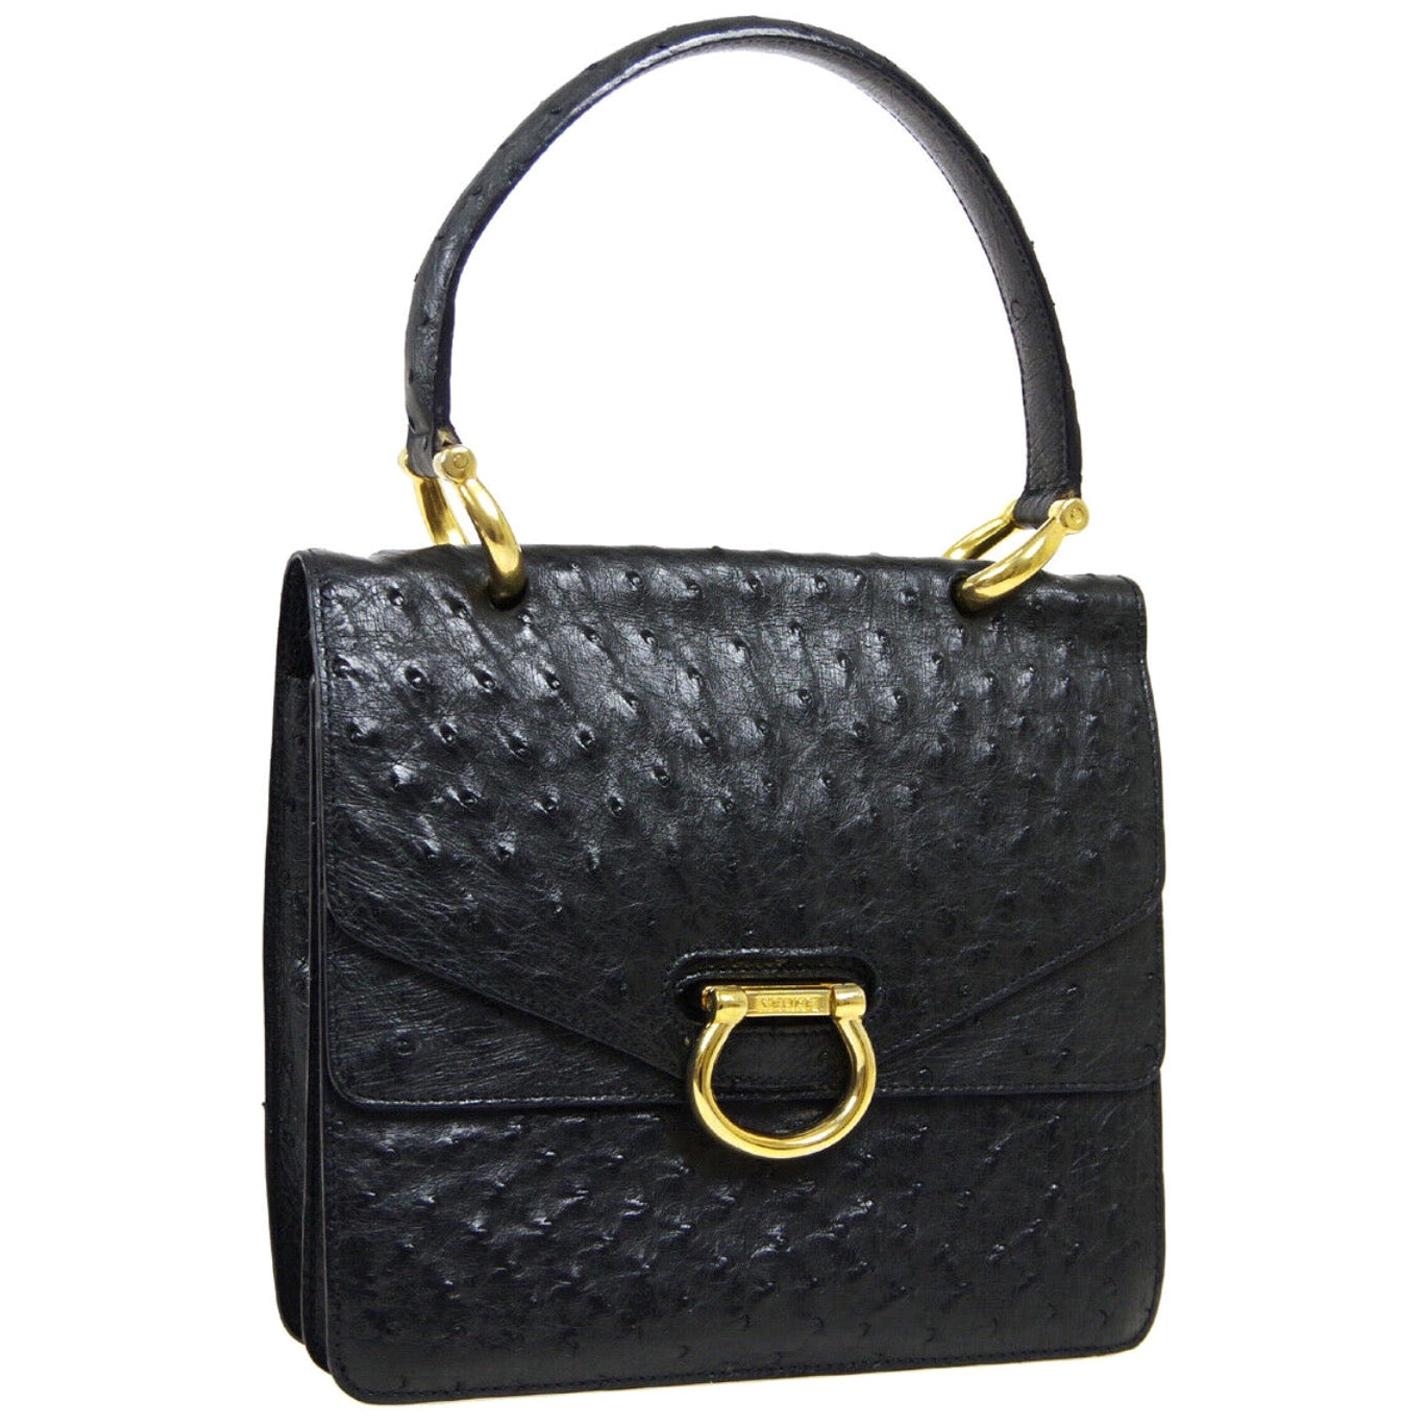 Celine Black Exotic Skin Leather Gold Kelly Style Top Handle Satchel Flap Bag